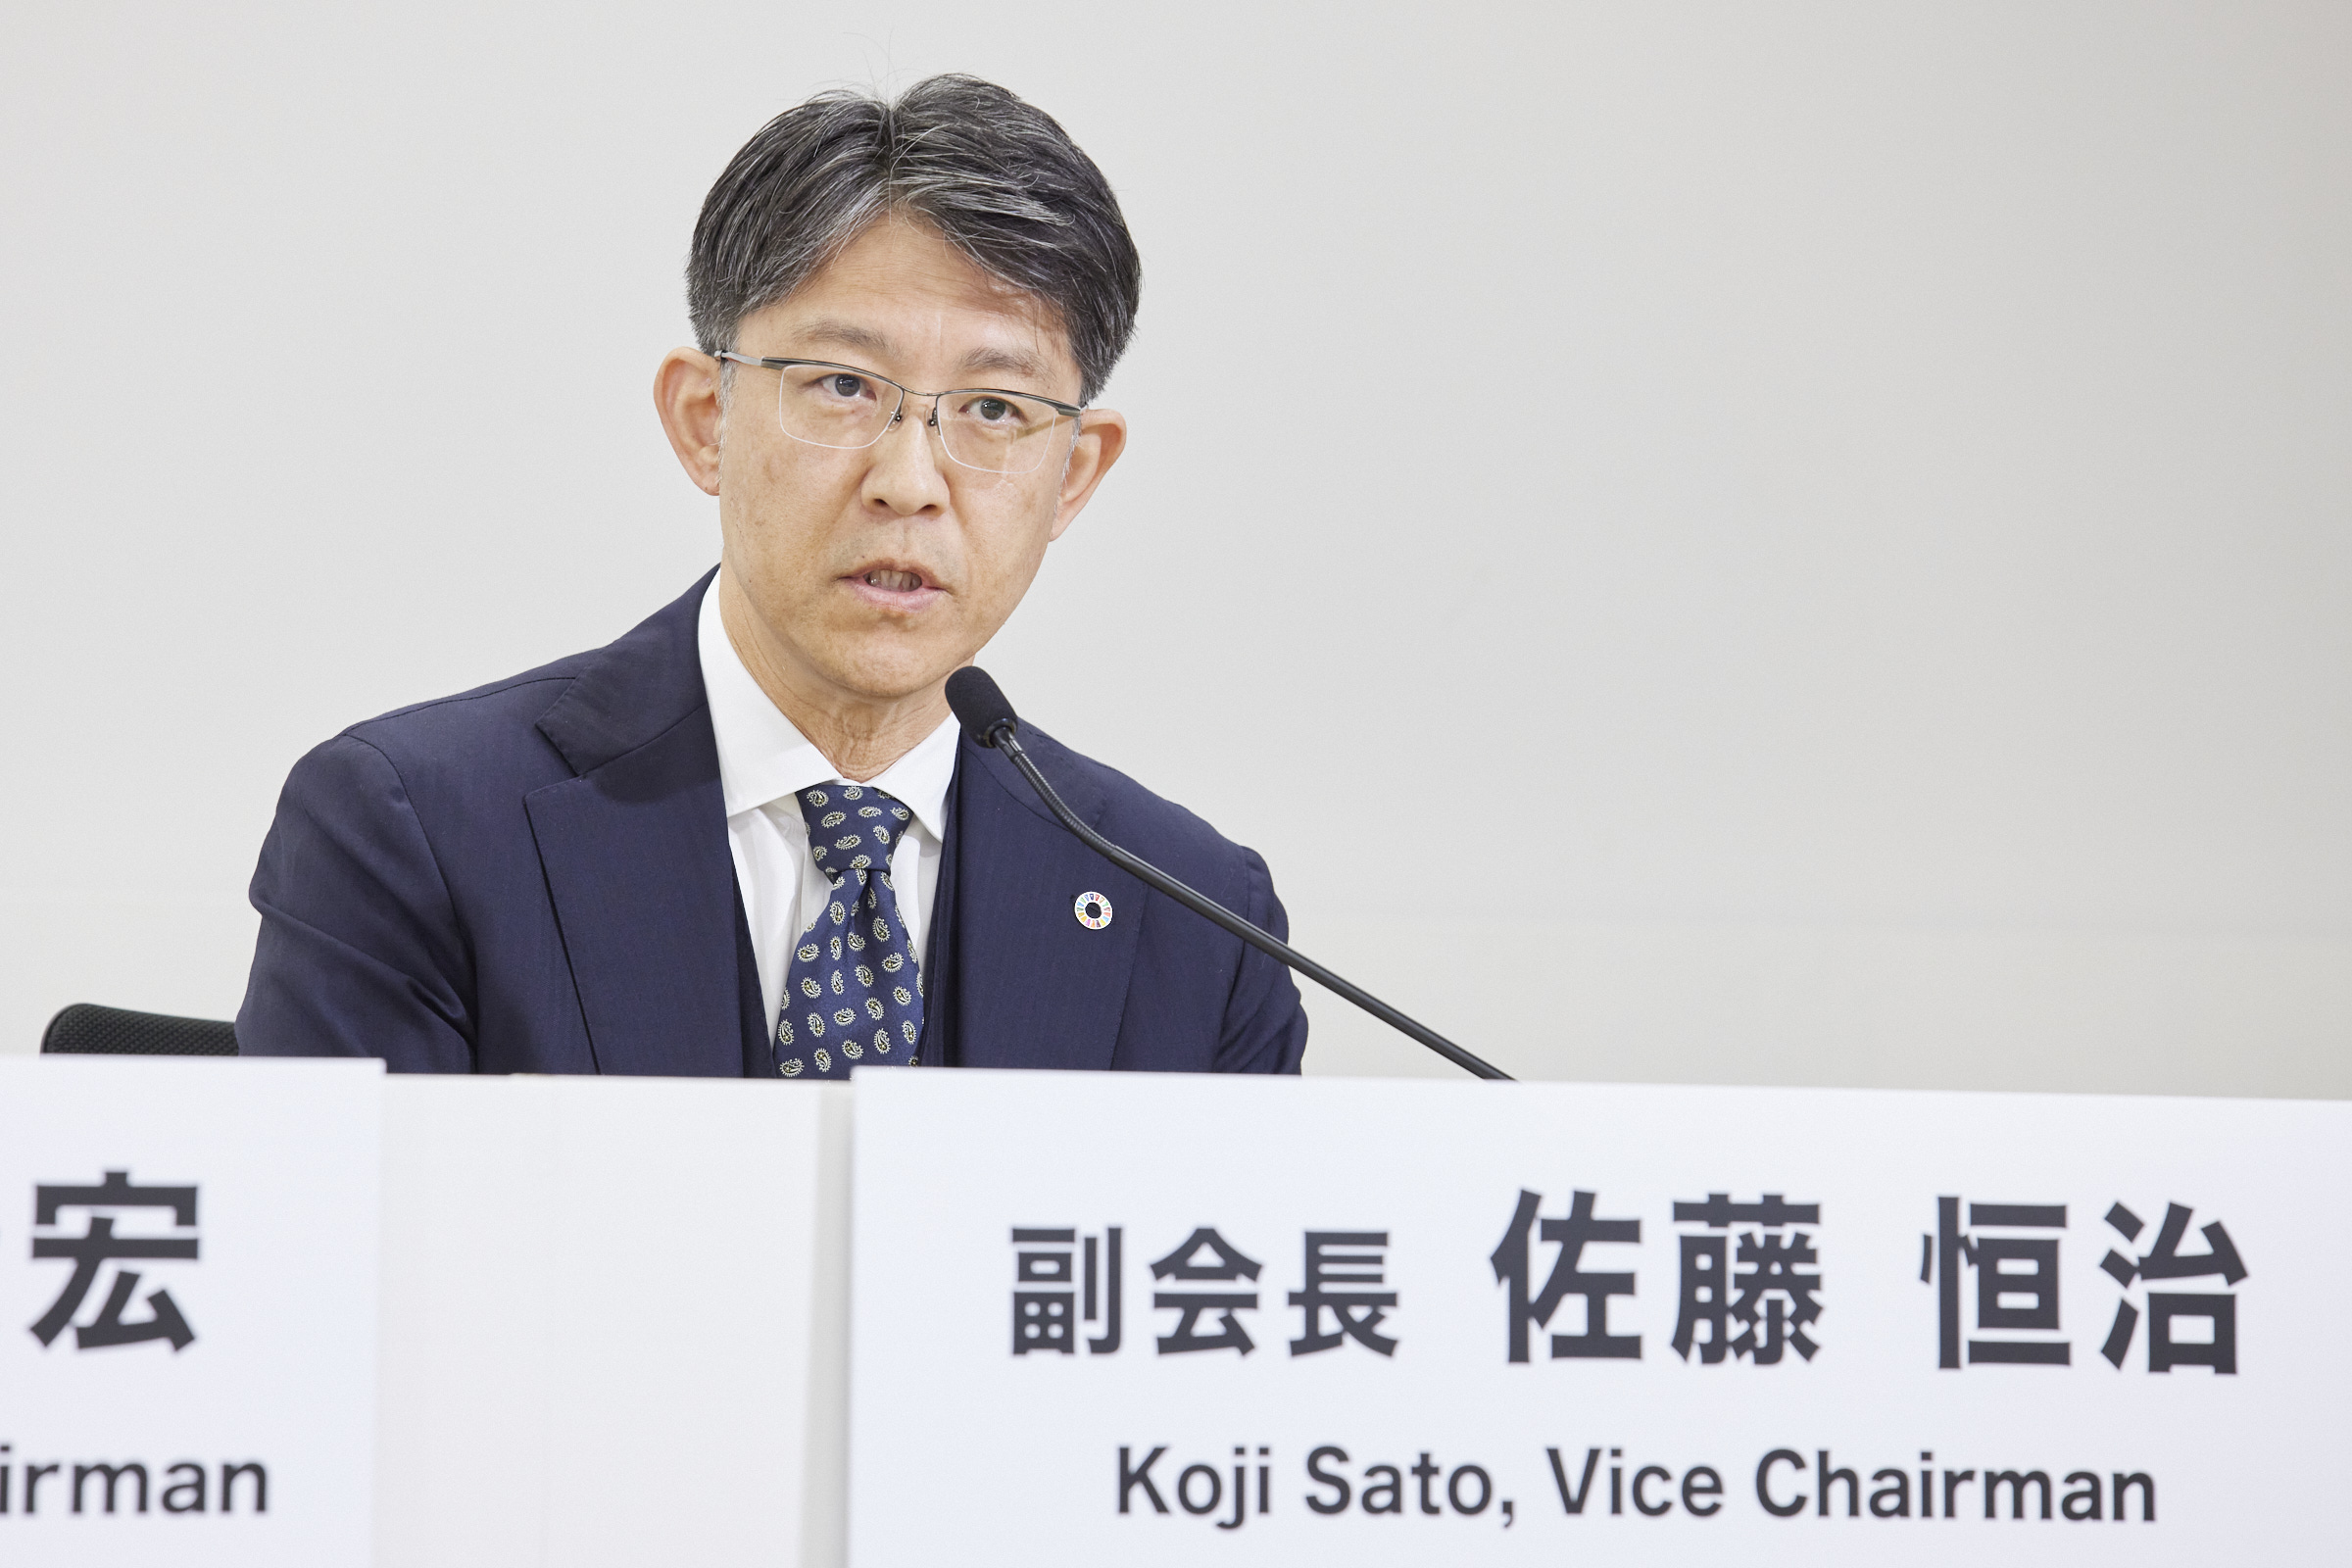 SATO Koji, Vice Chairman (President, Toyota Motor Corp.)